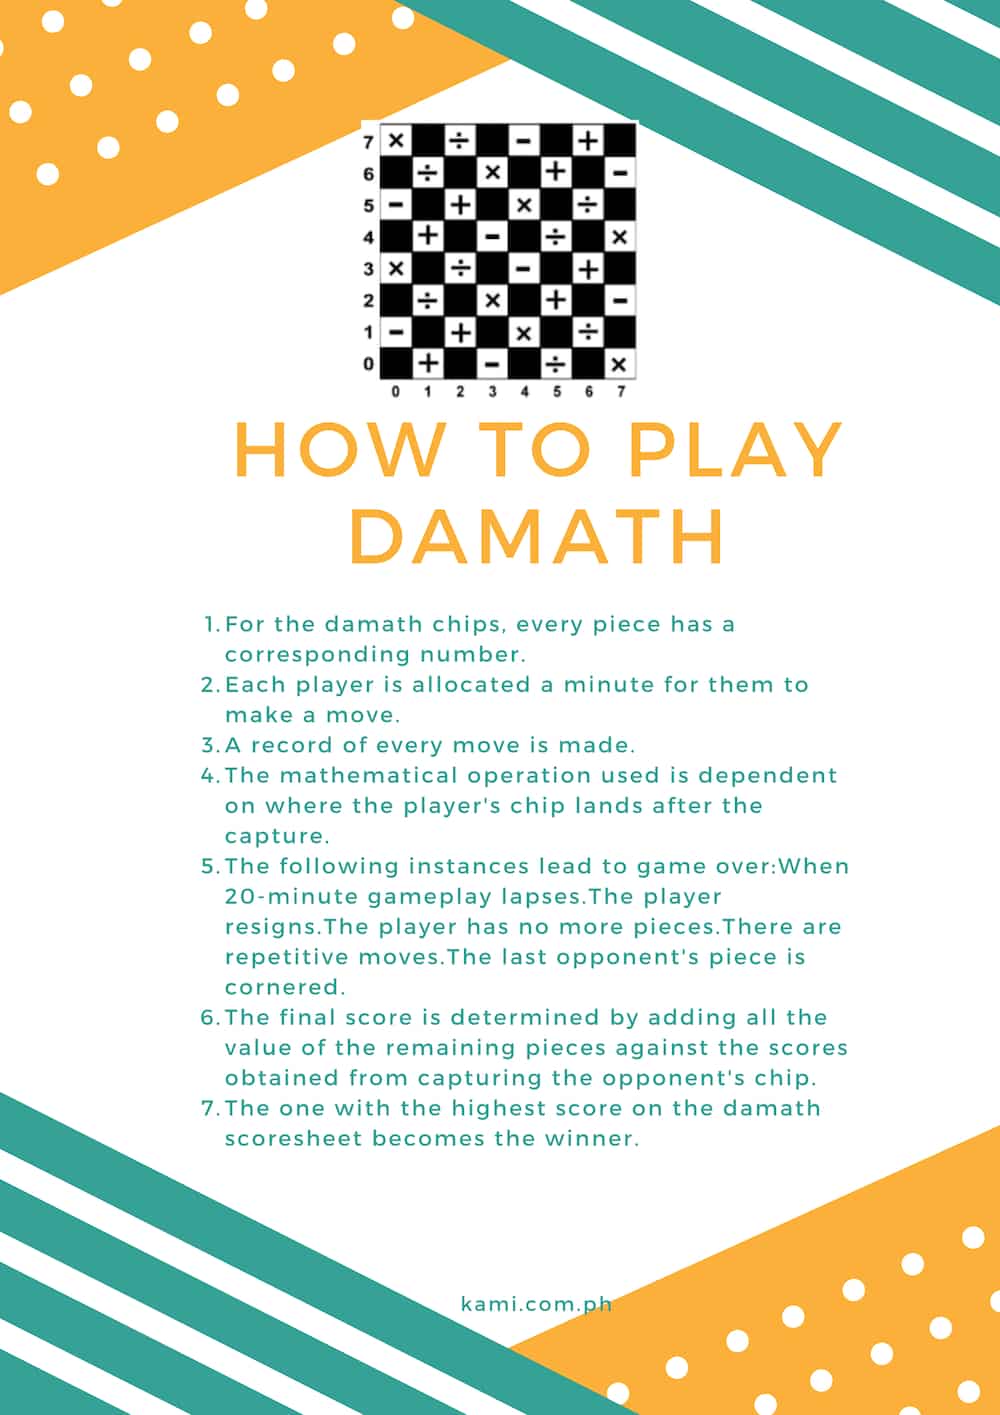 How to play damath